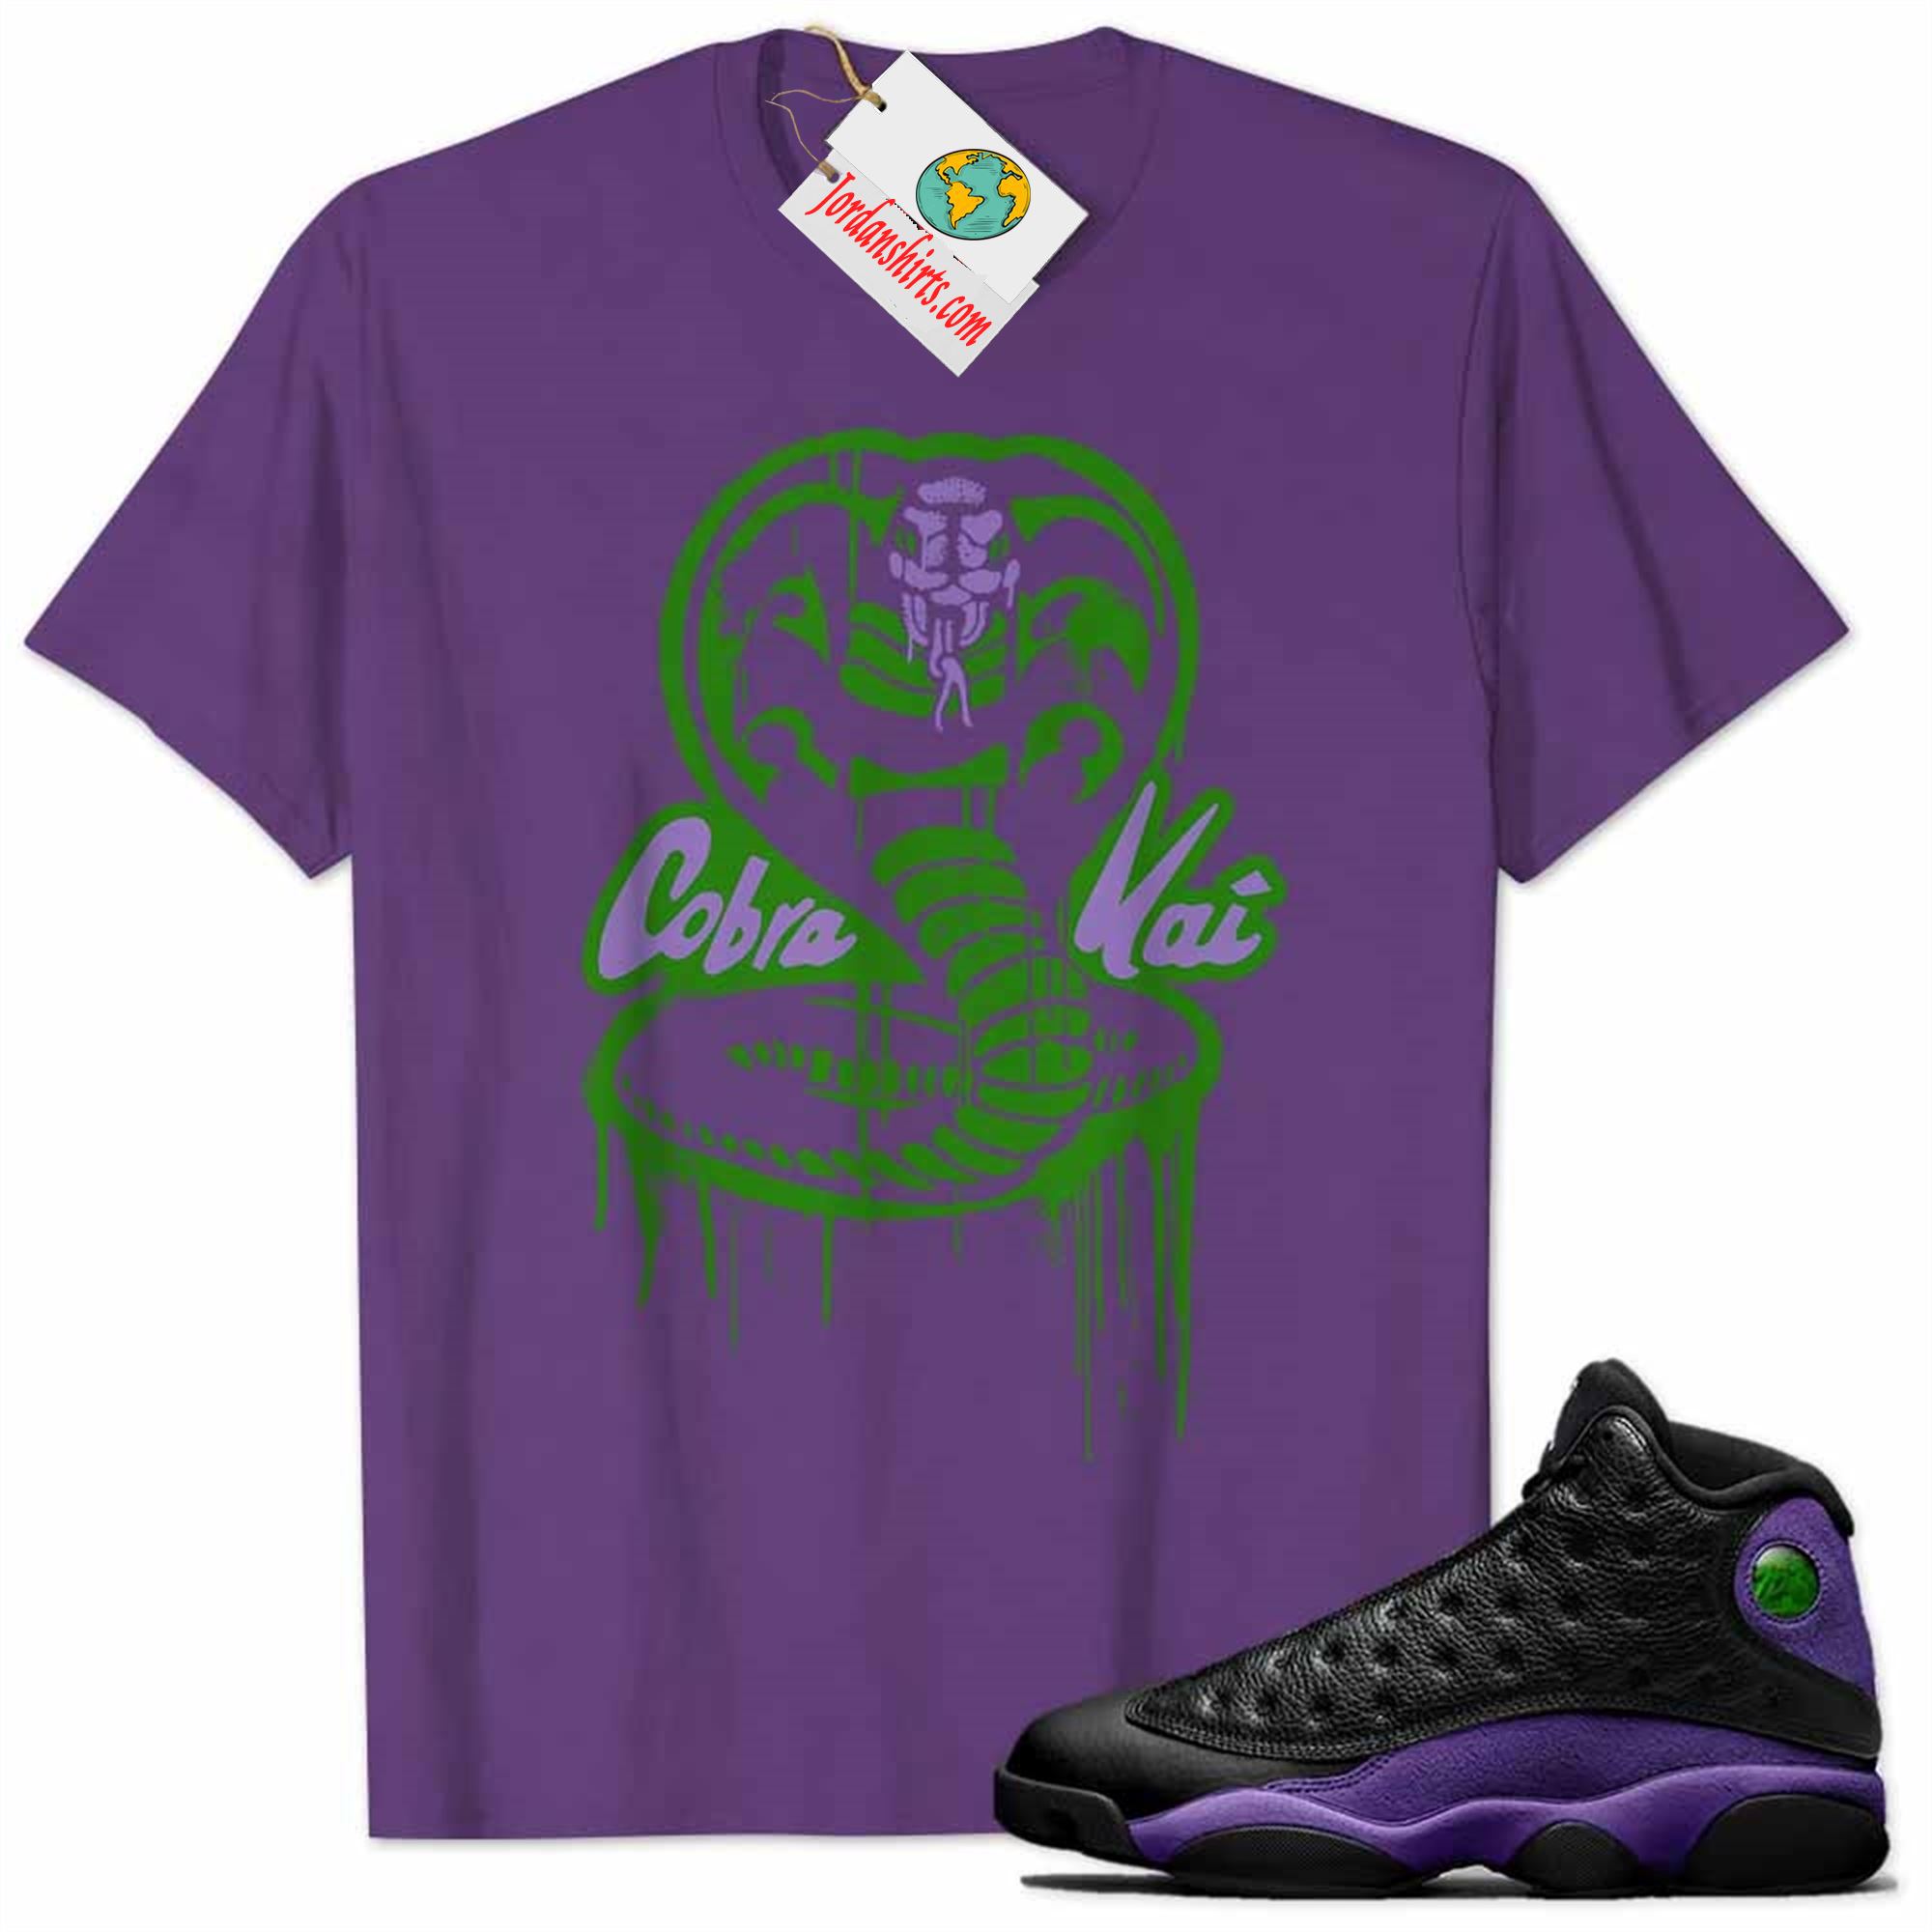 Jordan 13 Shirt, Cobra Kai No Mercy Melt Purple Air Jordan 13 Court Purple 13s Plus Size Up To 5xl